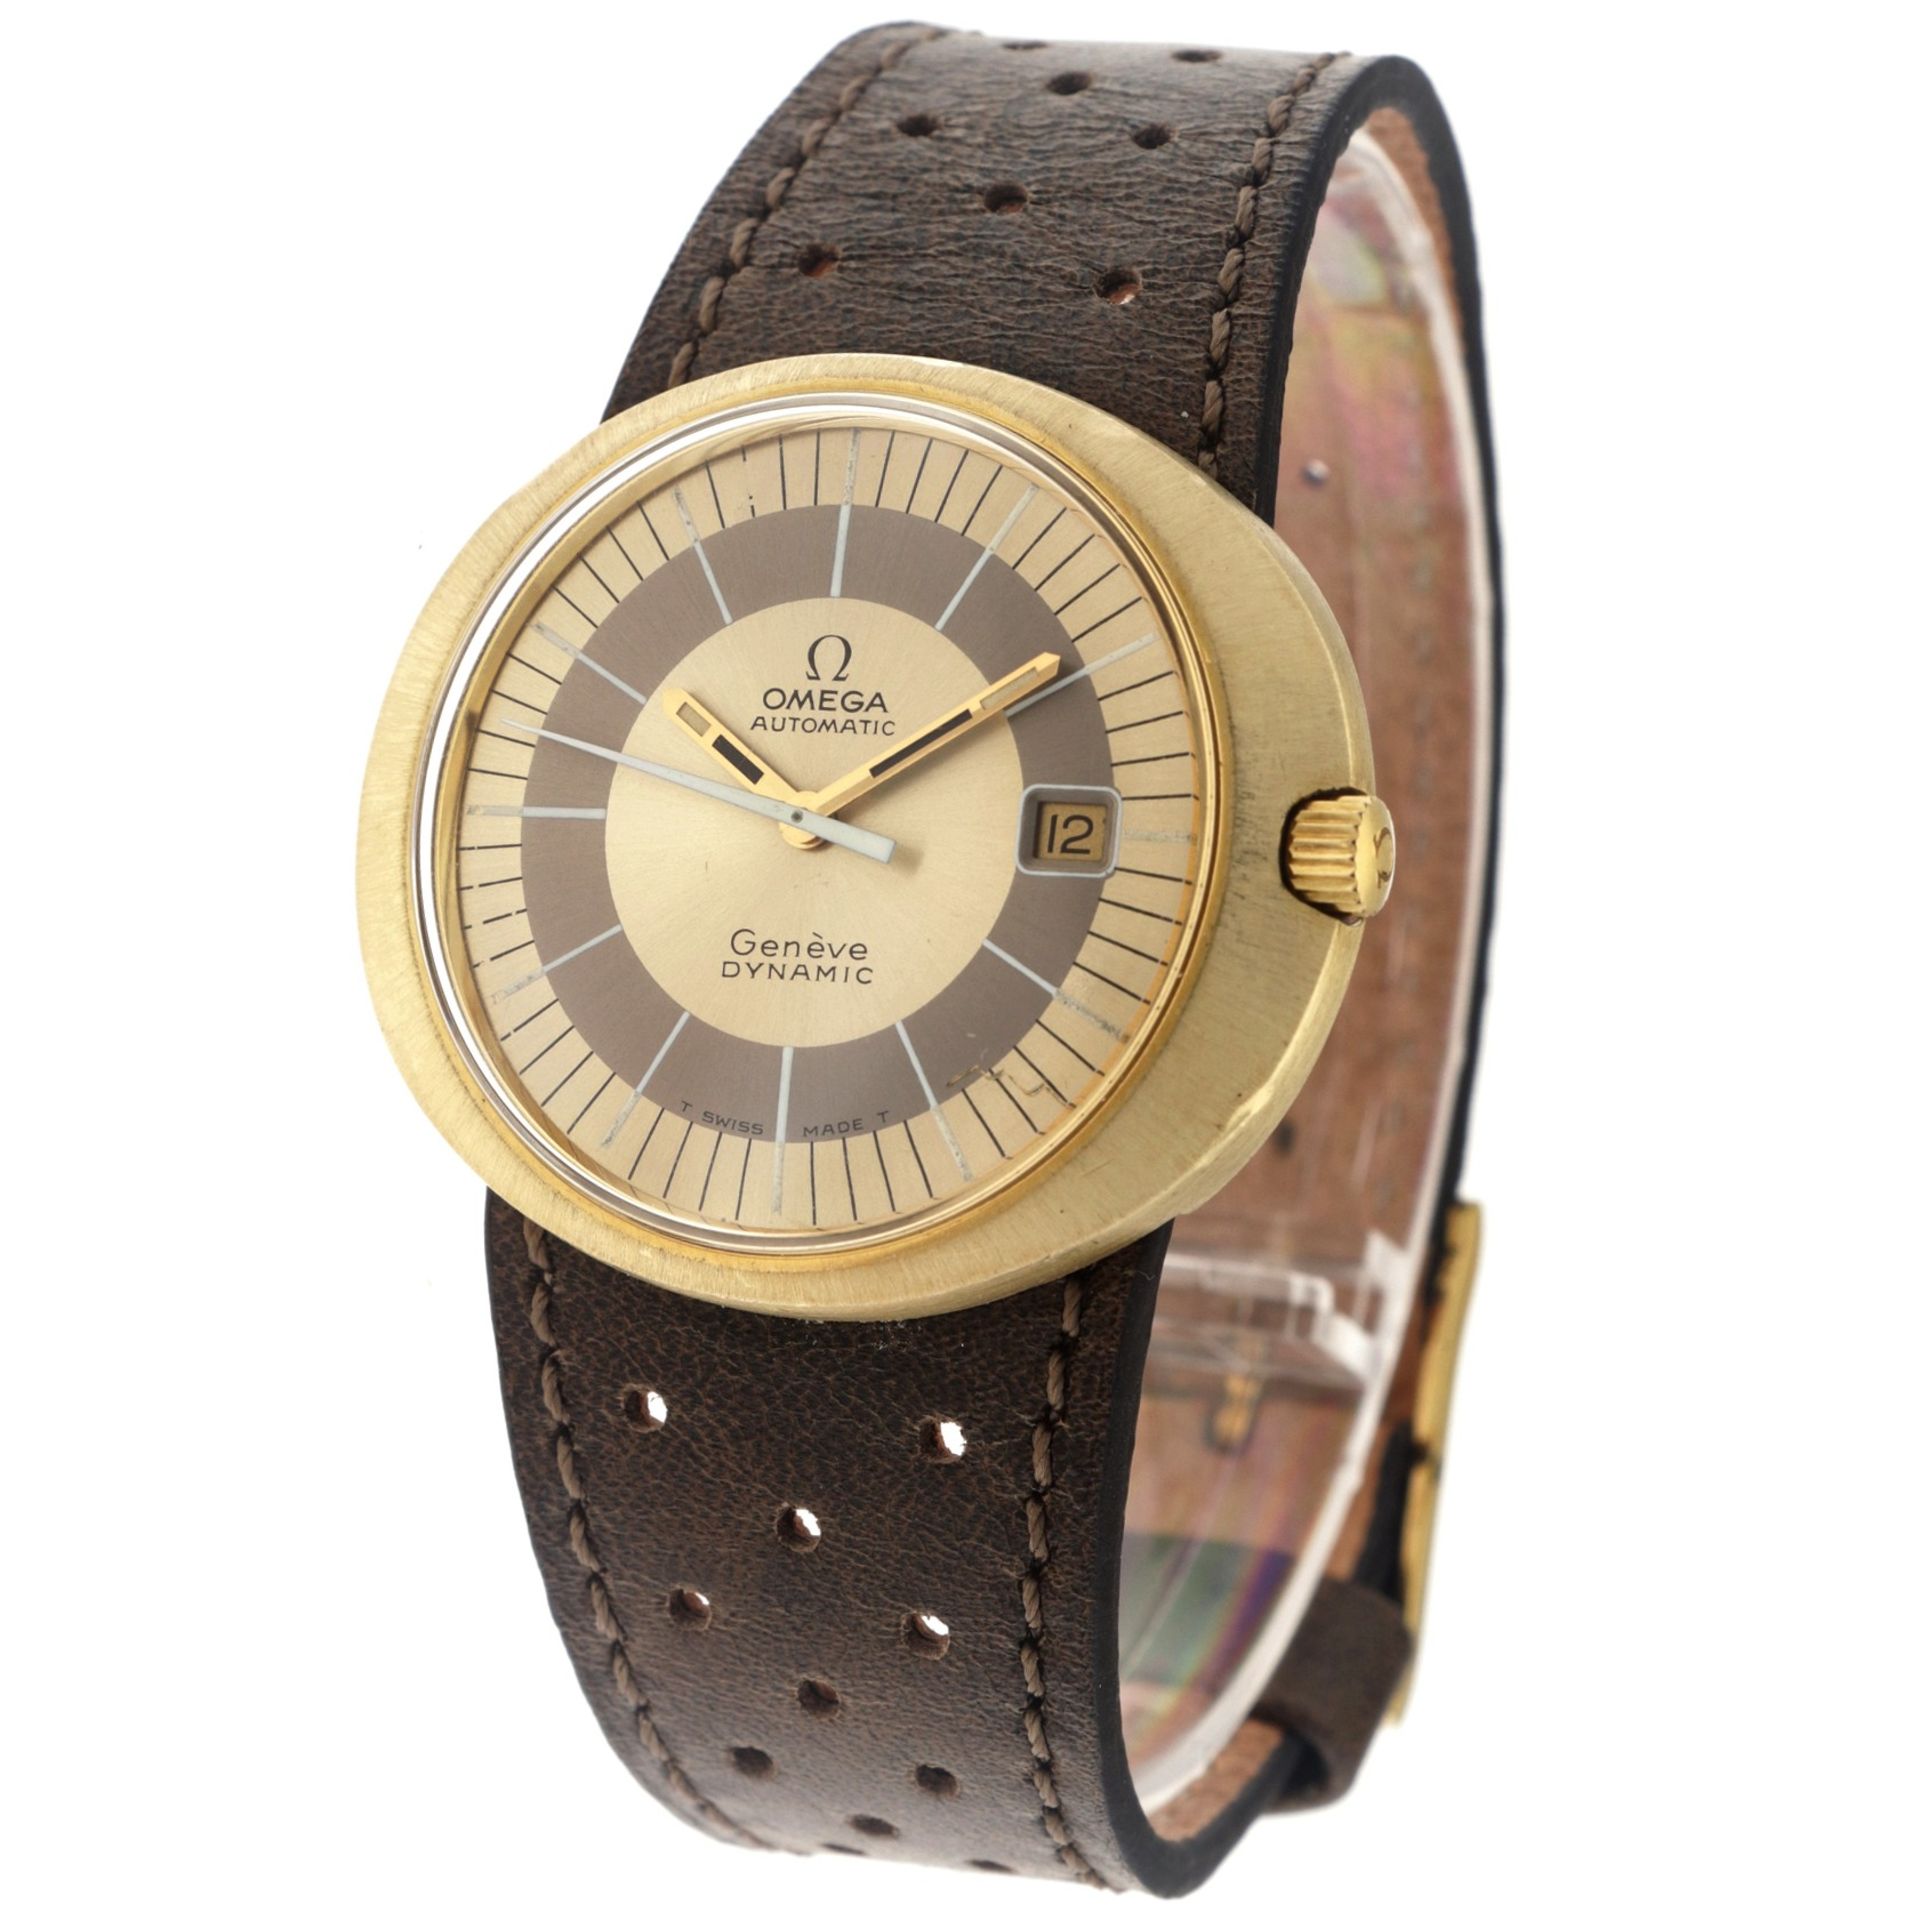 No Reserve - Omega Geneva Dynamic 166.079 - Men's watch.  - Image 2 of 5